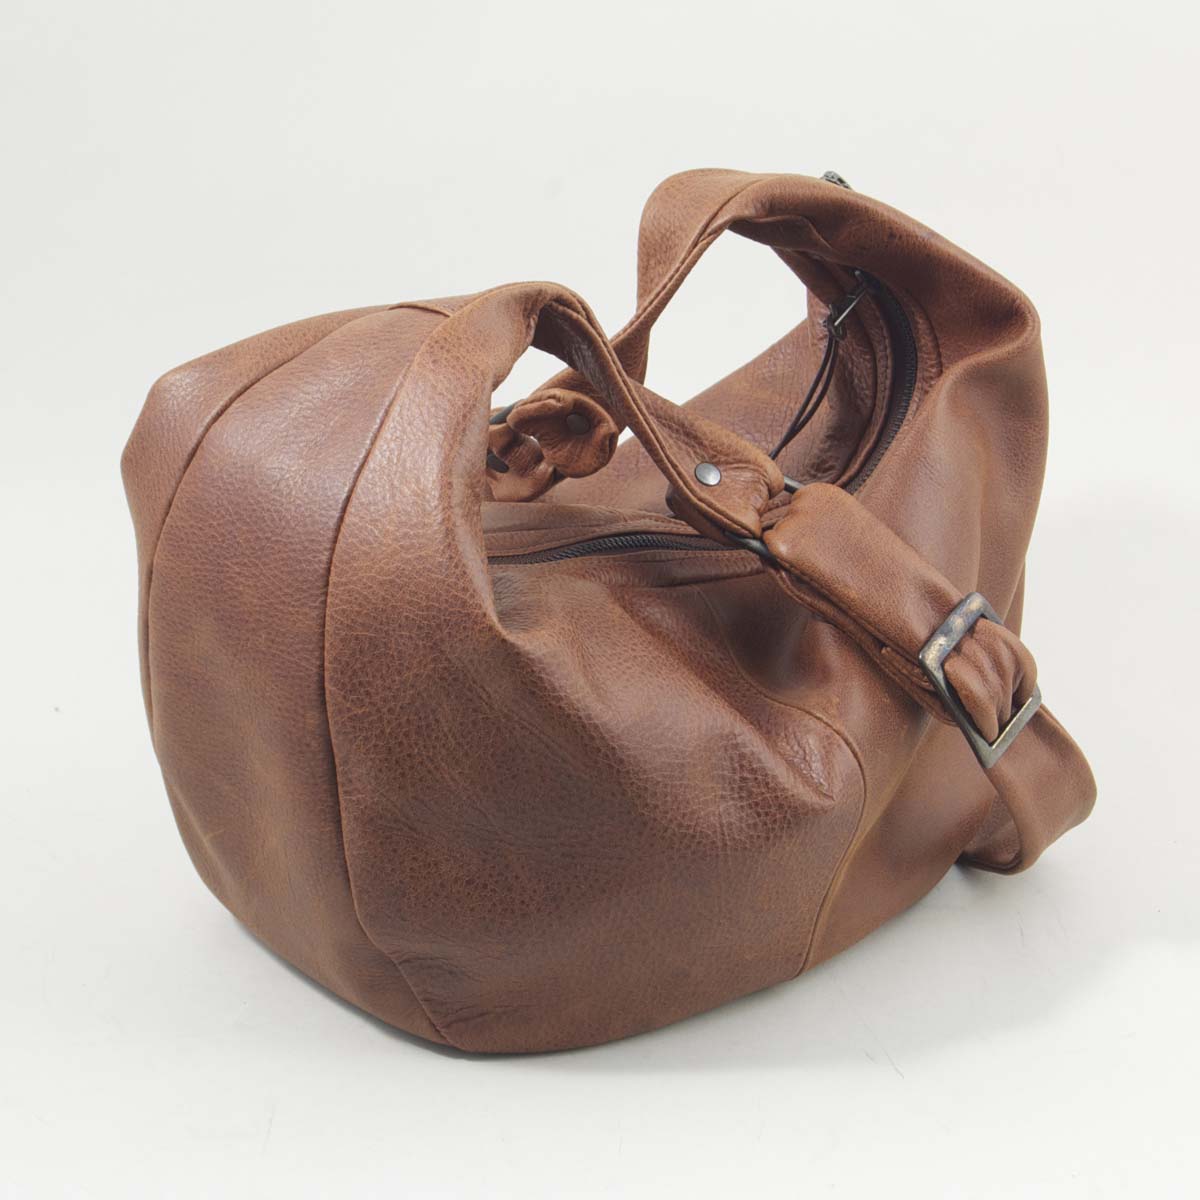 The Hammock Bag - Handmade Leather - Henry Tomkins